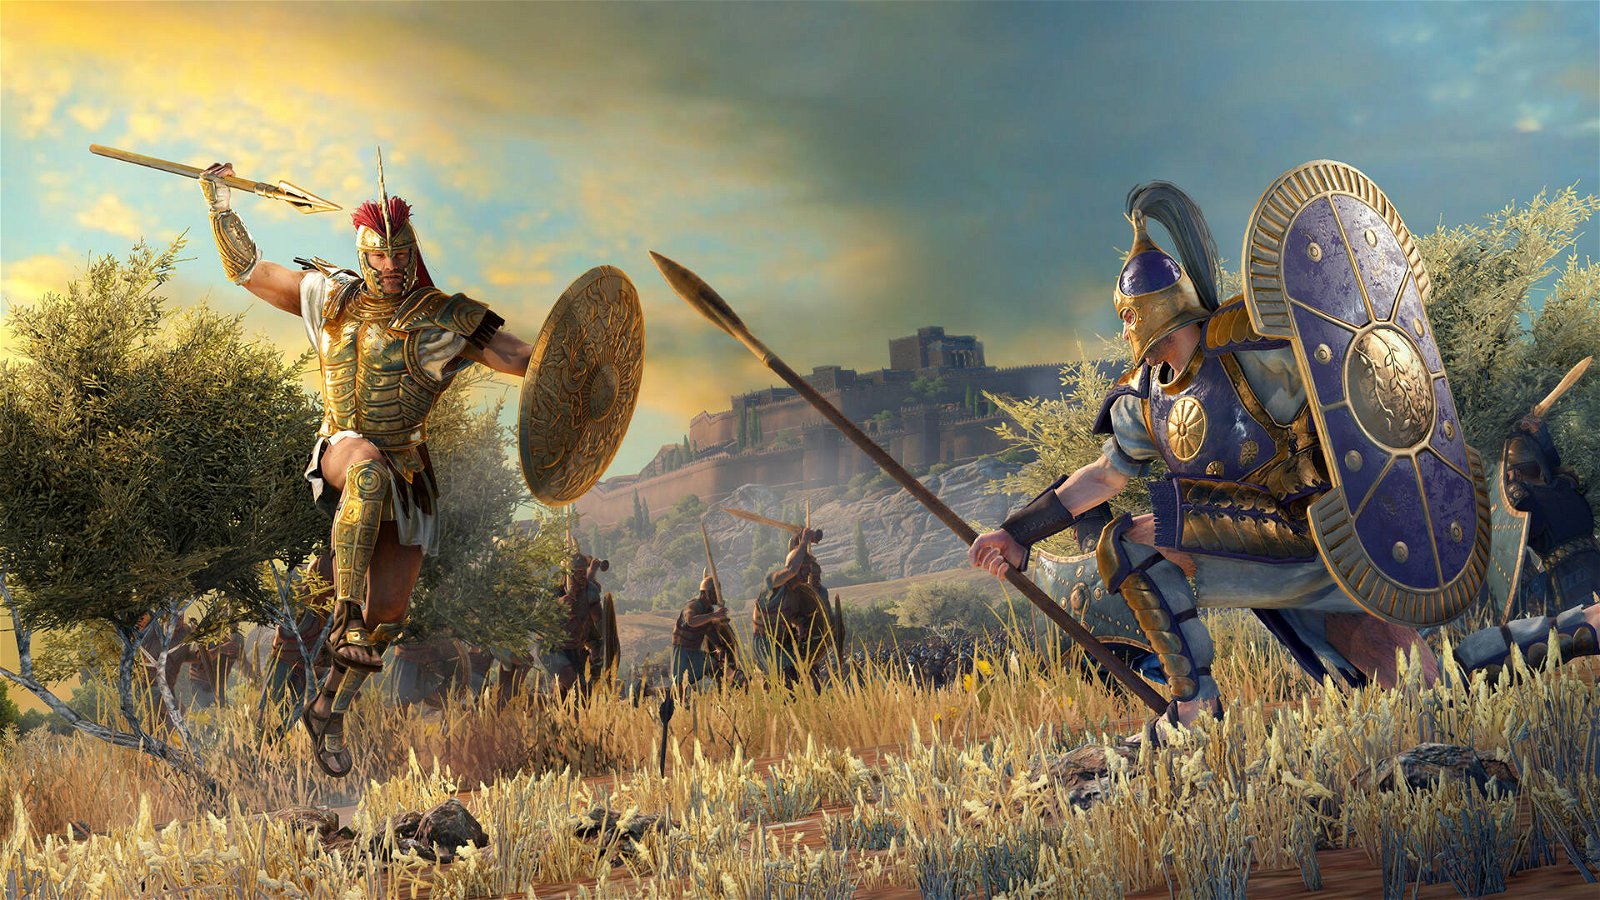 A Total War Saga: Troy | Recensione - Rievocazione storica o racconto leggendario?